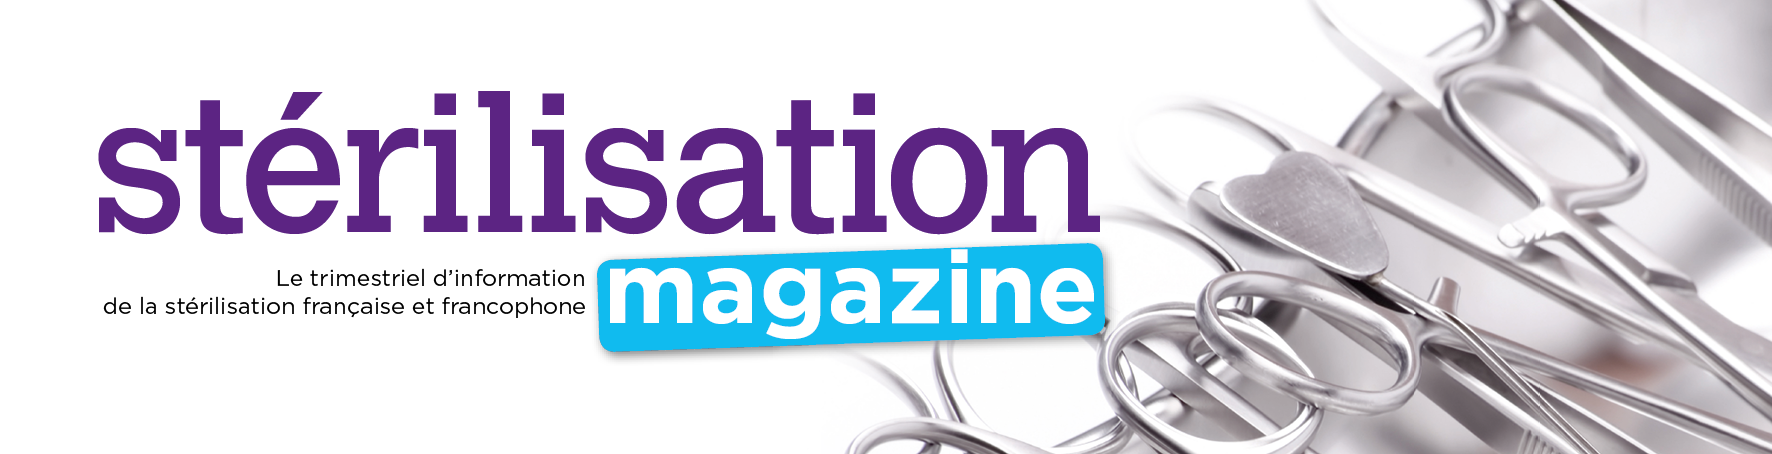 Stérilisation magazine